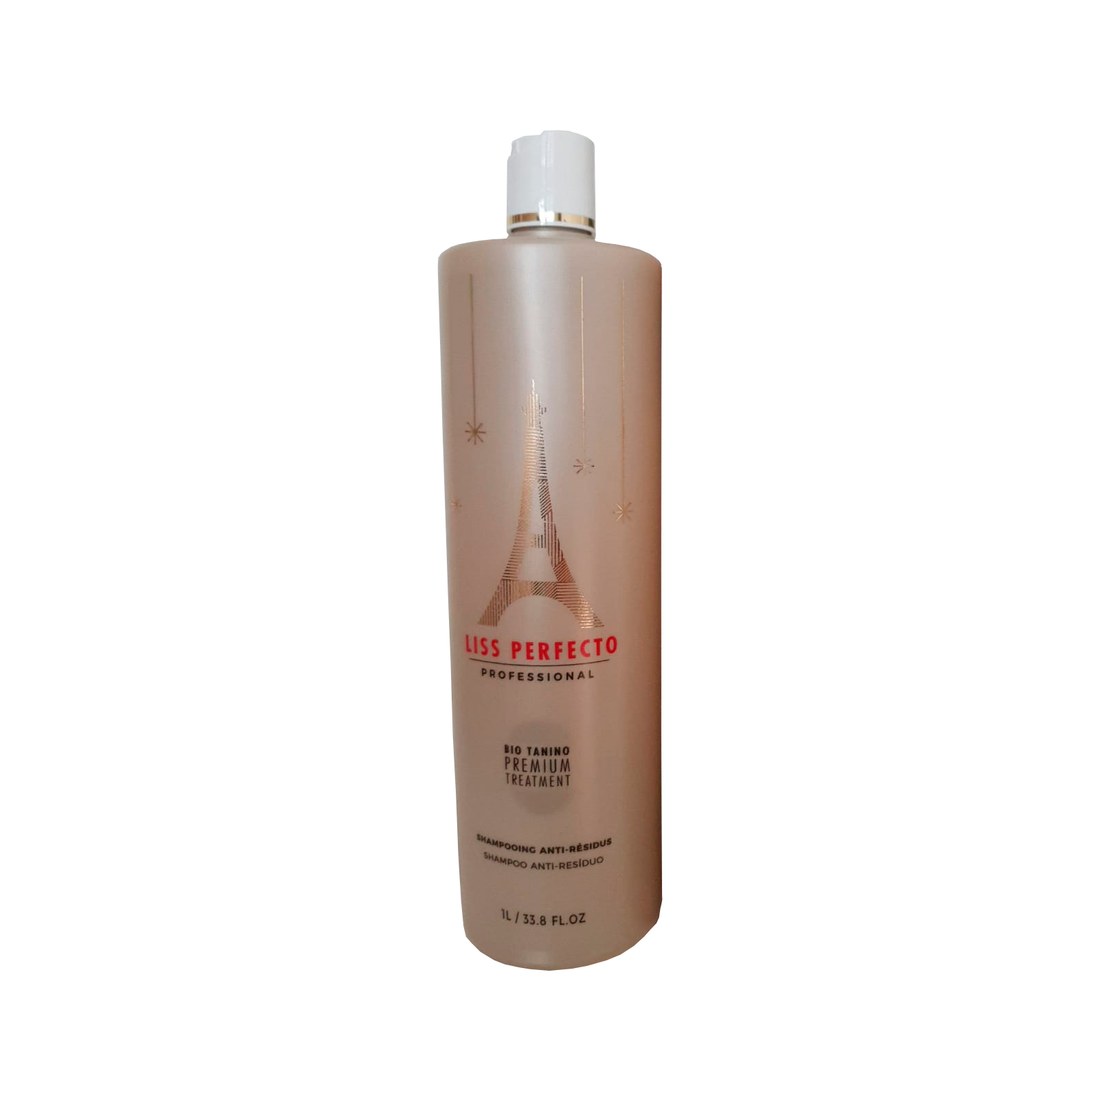 Liss Perfecto, Bio Tanino Premium, Deep Cleansing Shampoo, 1L